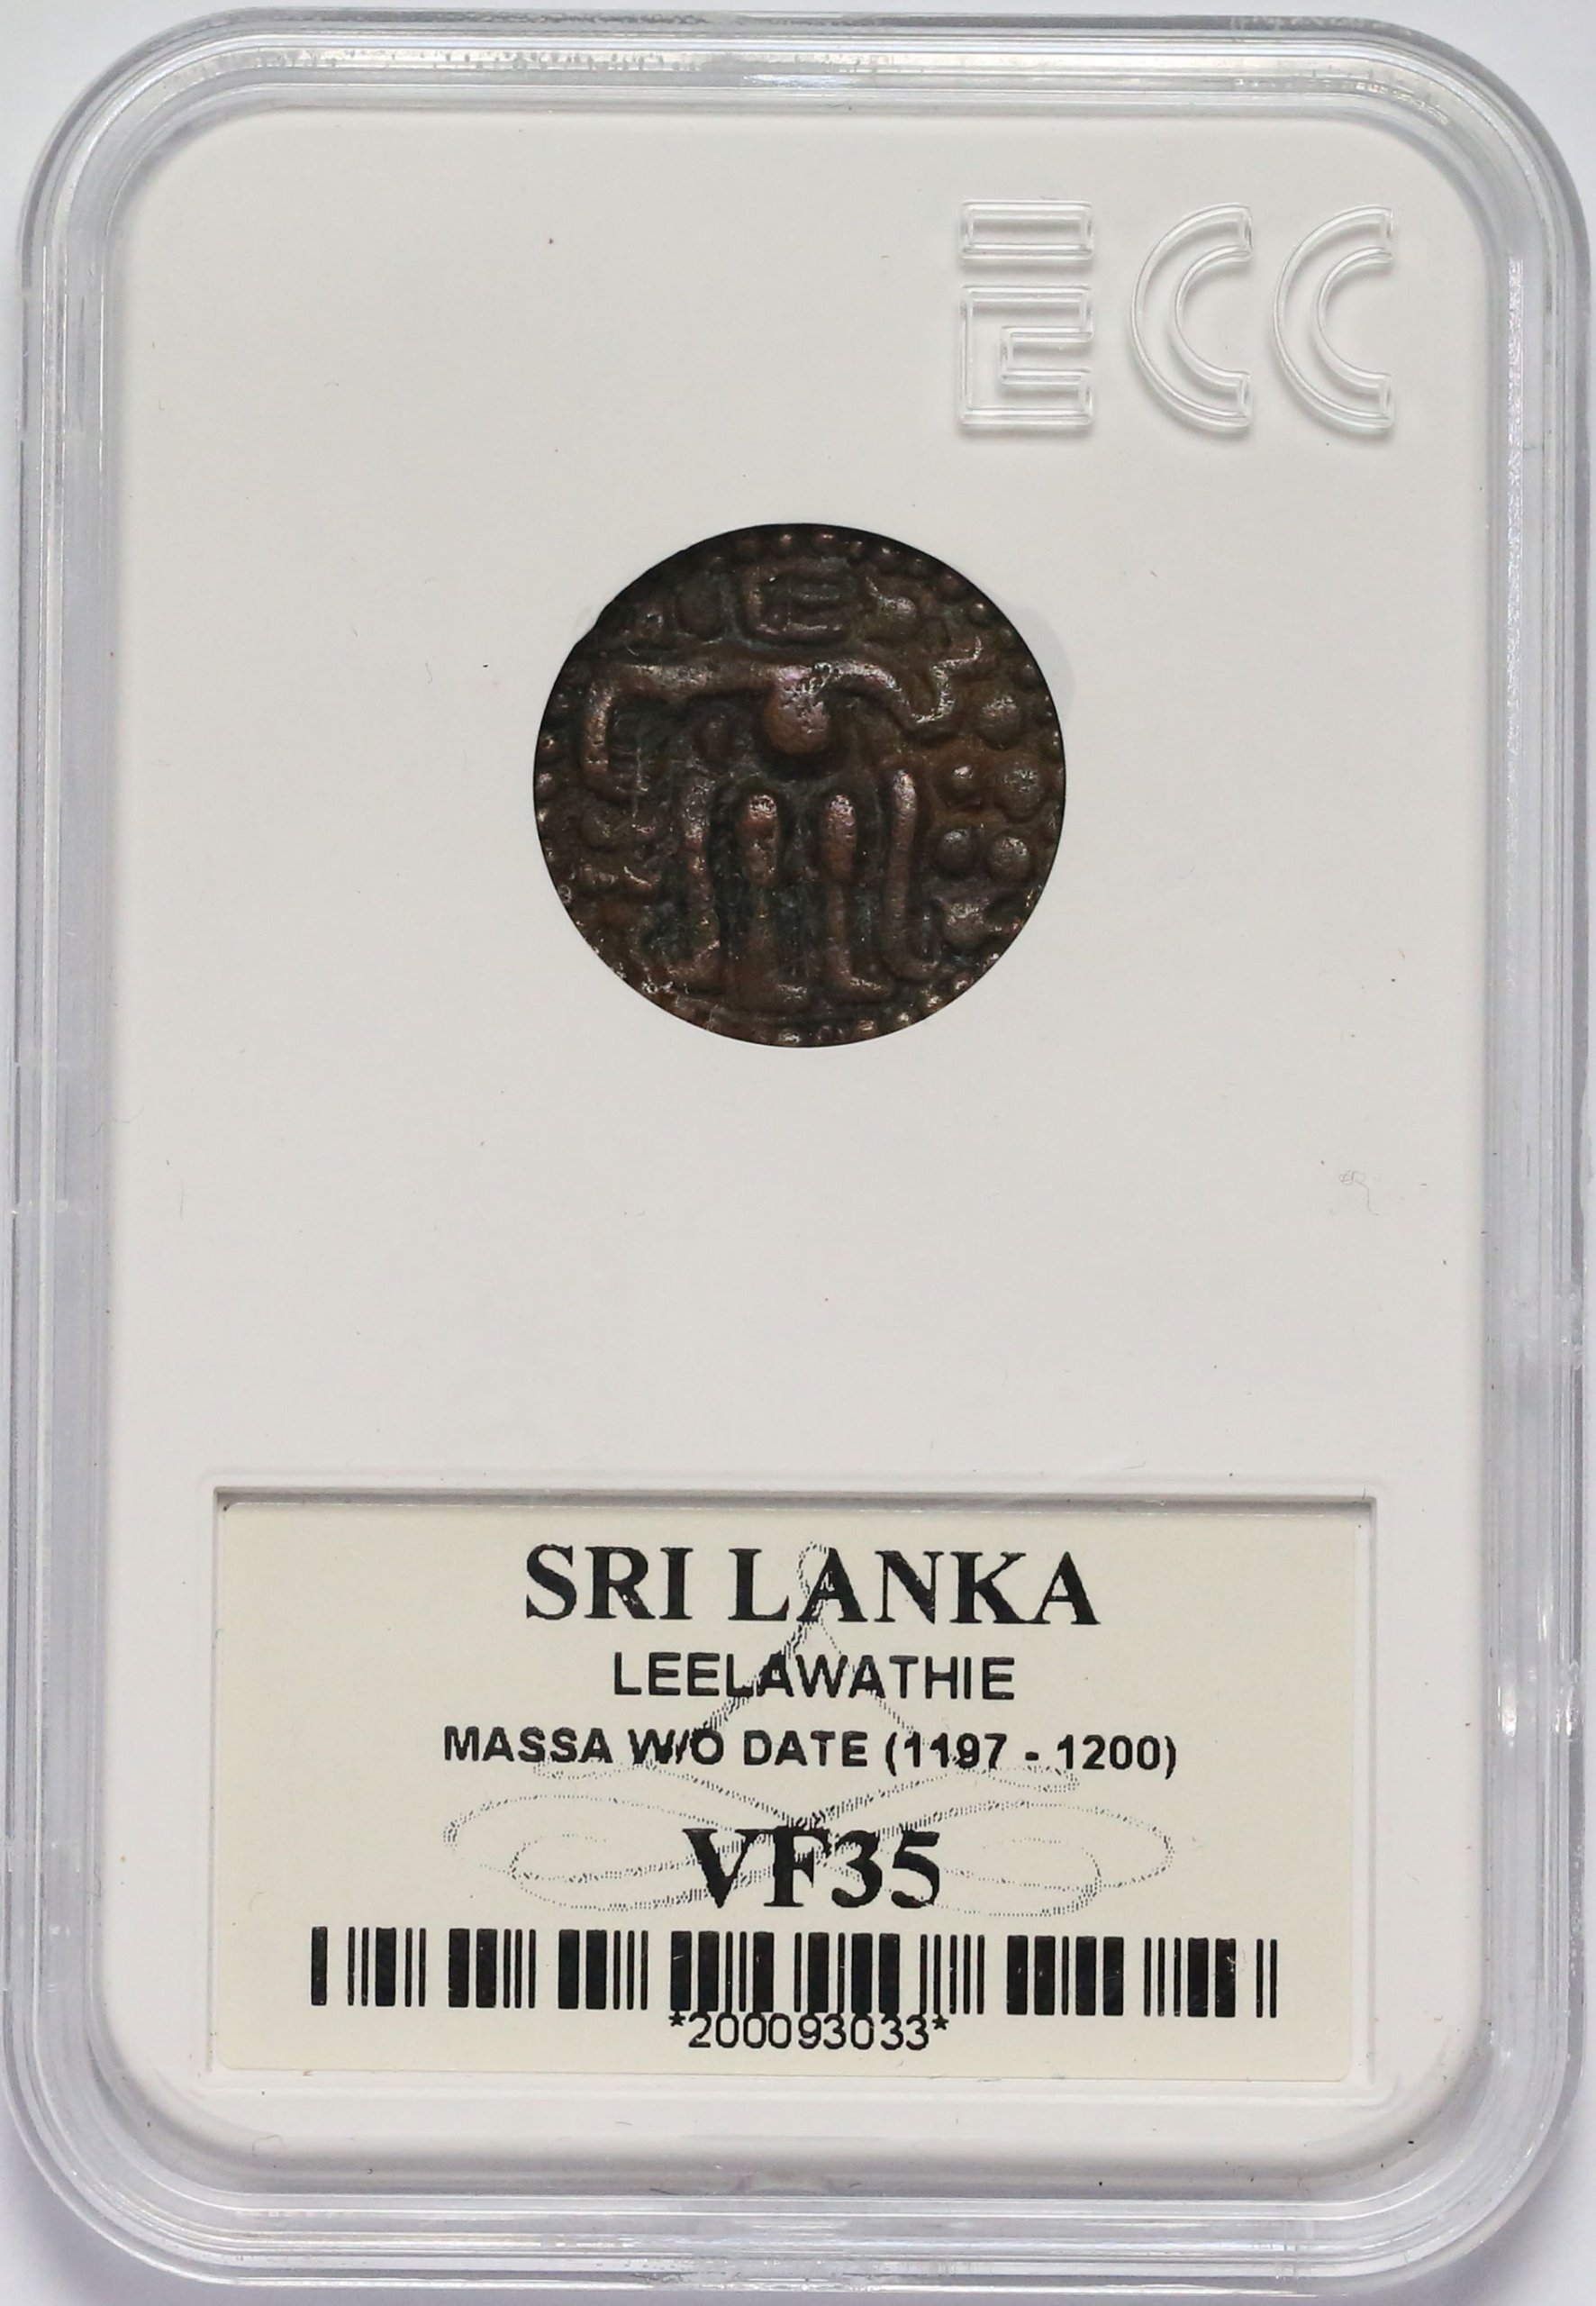 6439. Sri Lanka Leelawathie 1197-1200 GCN VF35